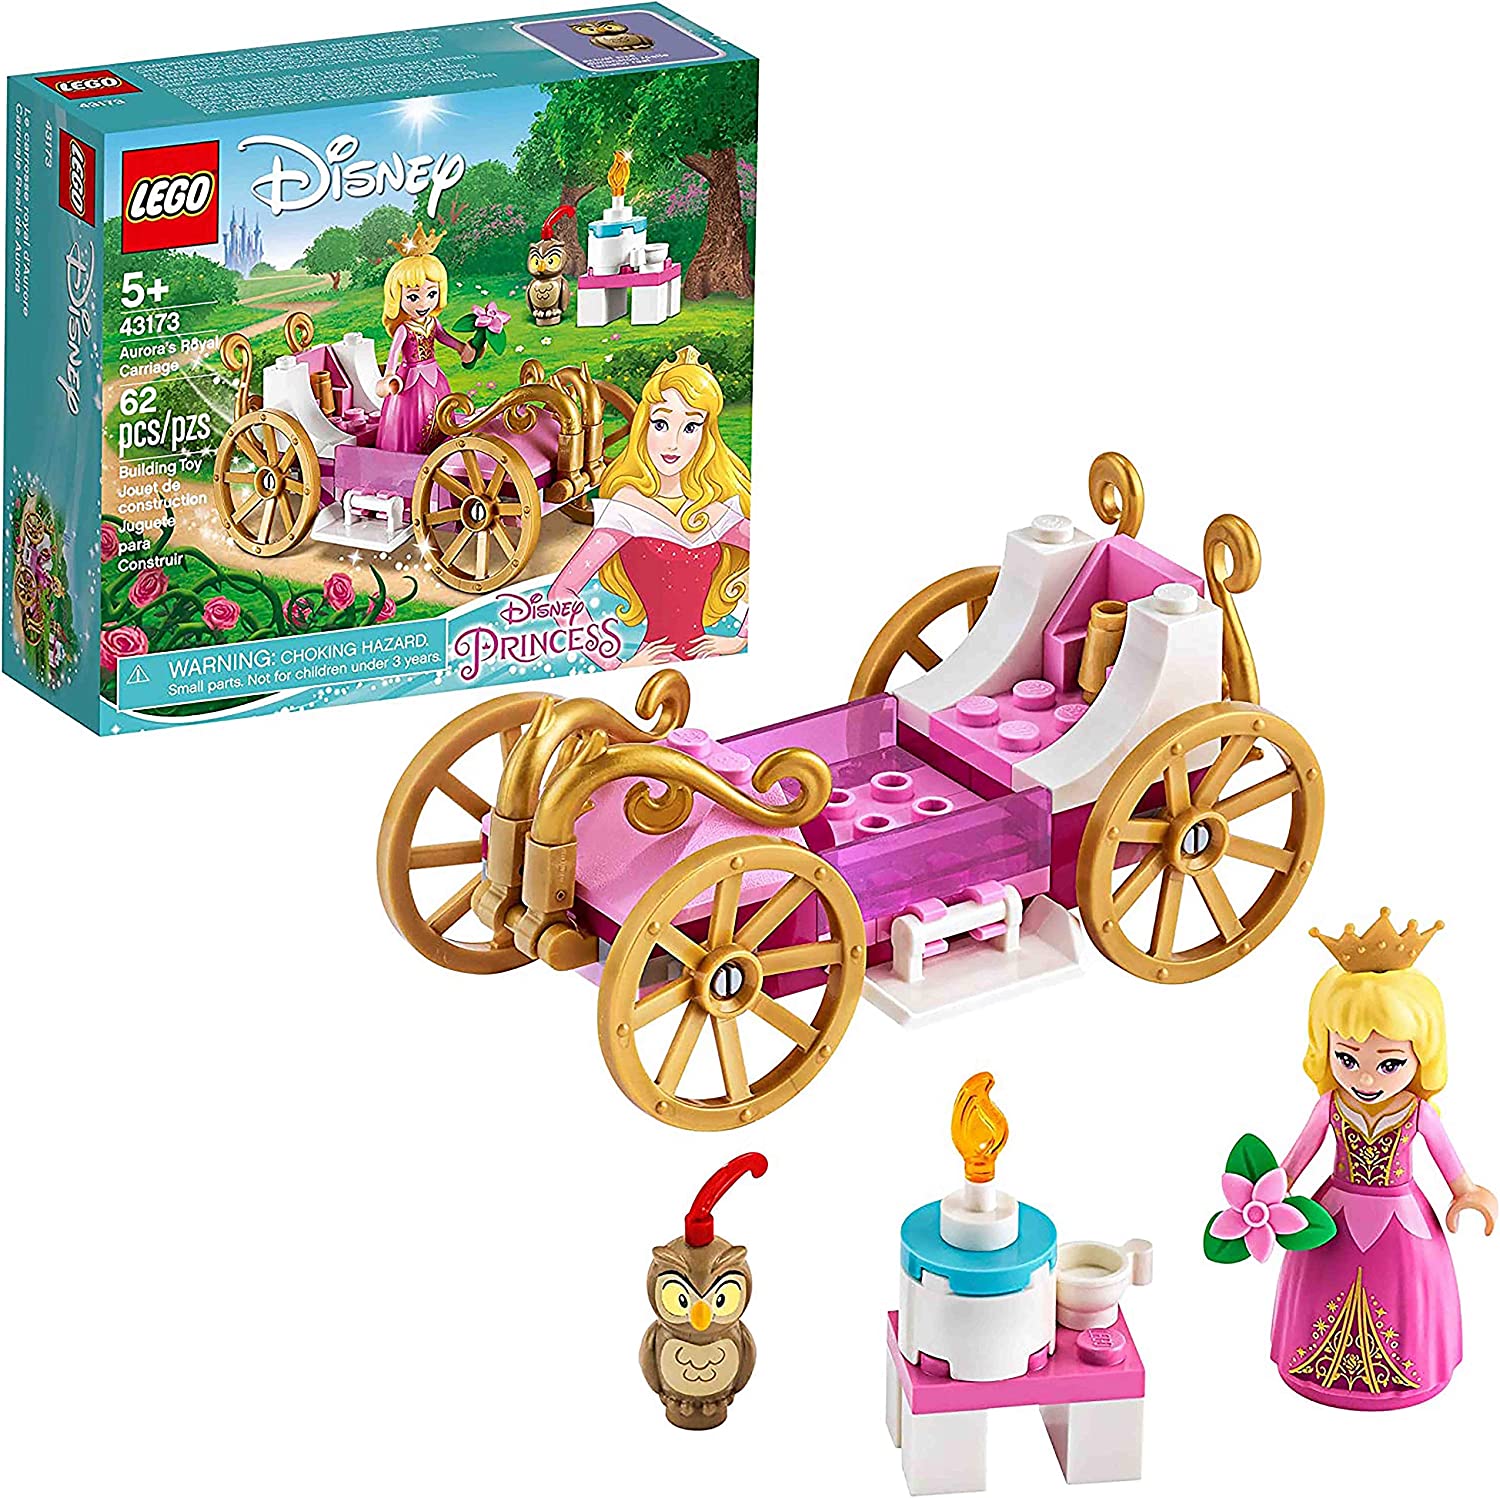 Aurora's Royal Carriage/Disney